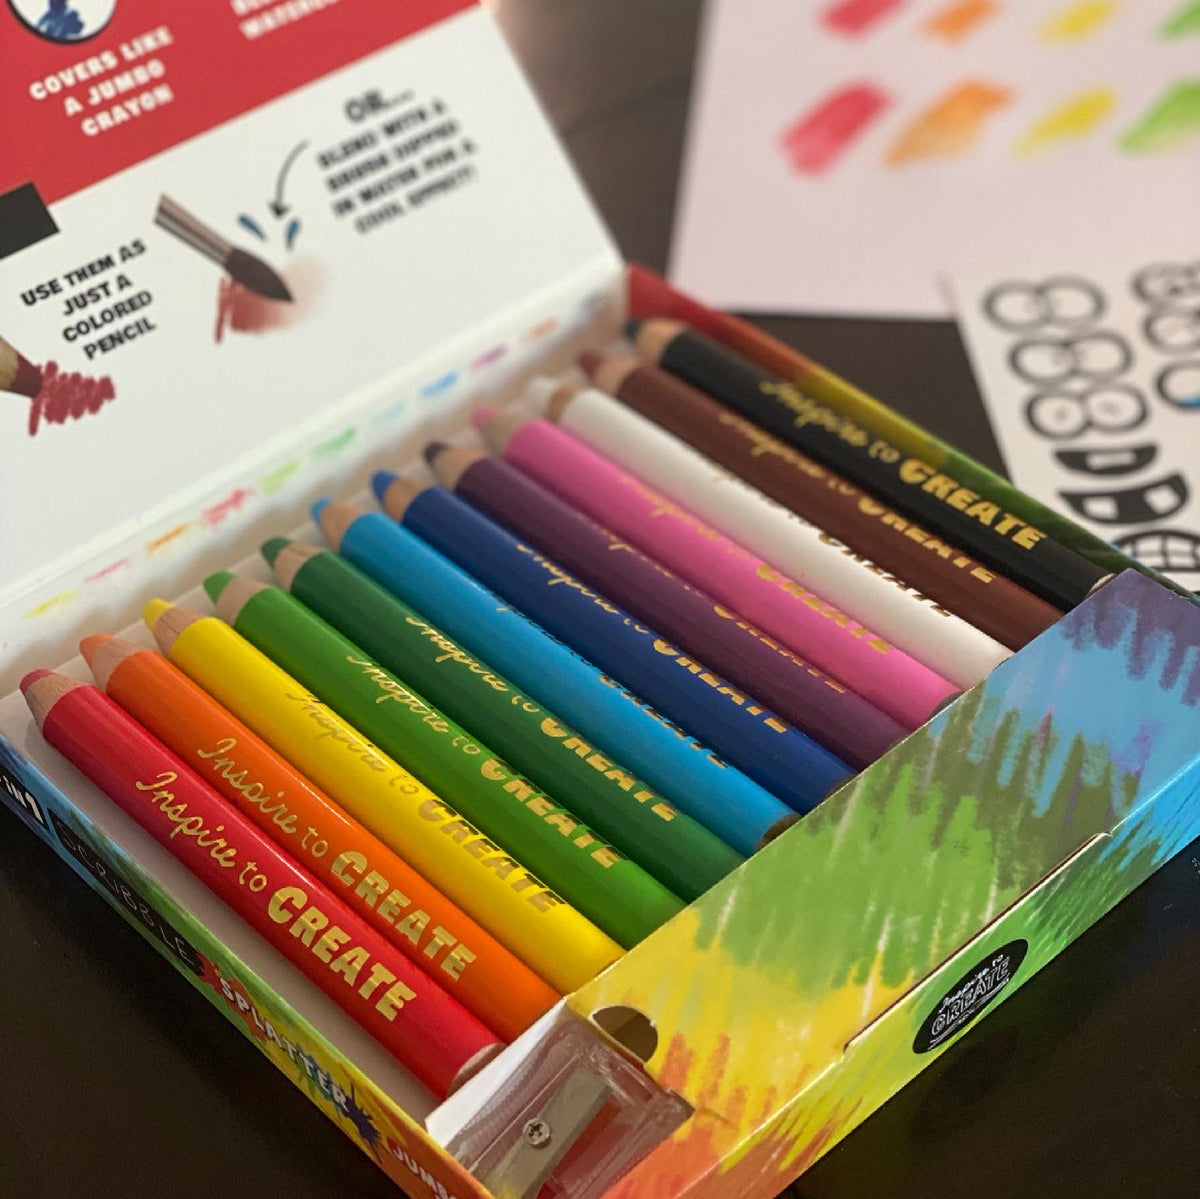 3-in-1 Jumbo Colored Pencils For Kids 3+ Scribble Splatter – Diane Alber